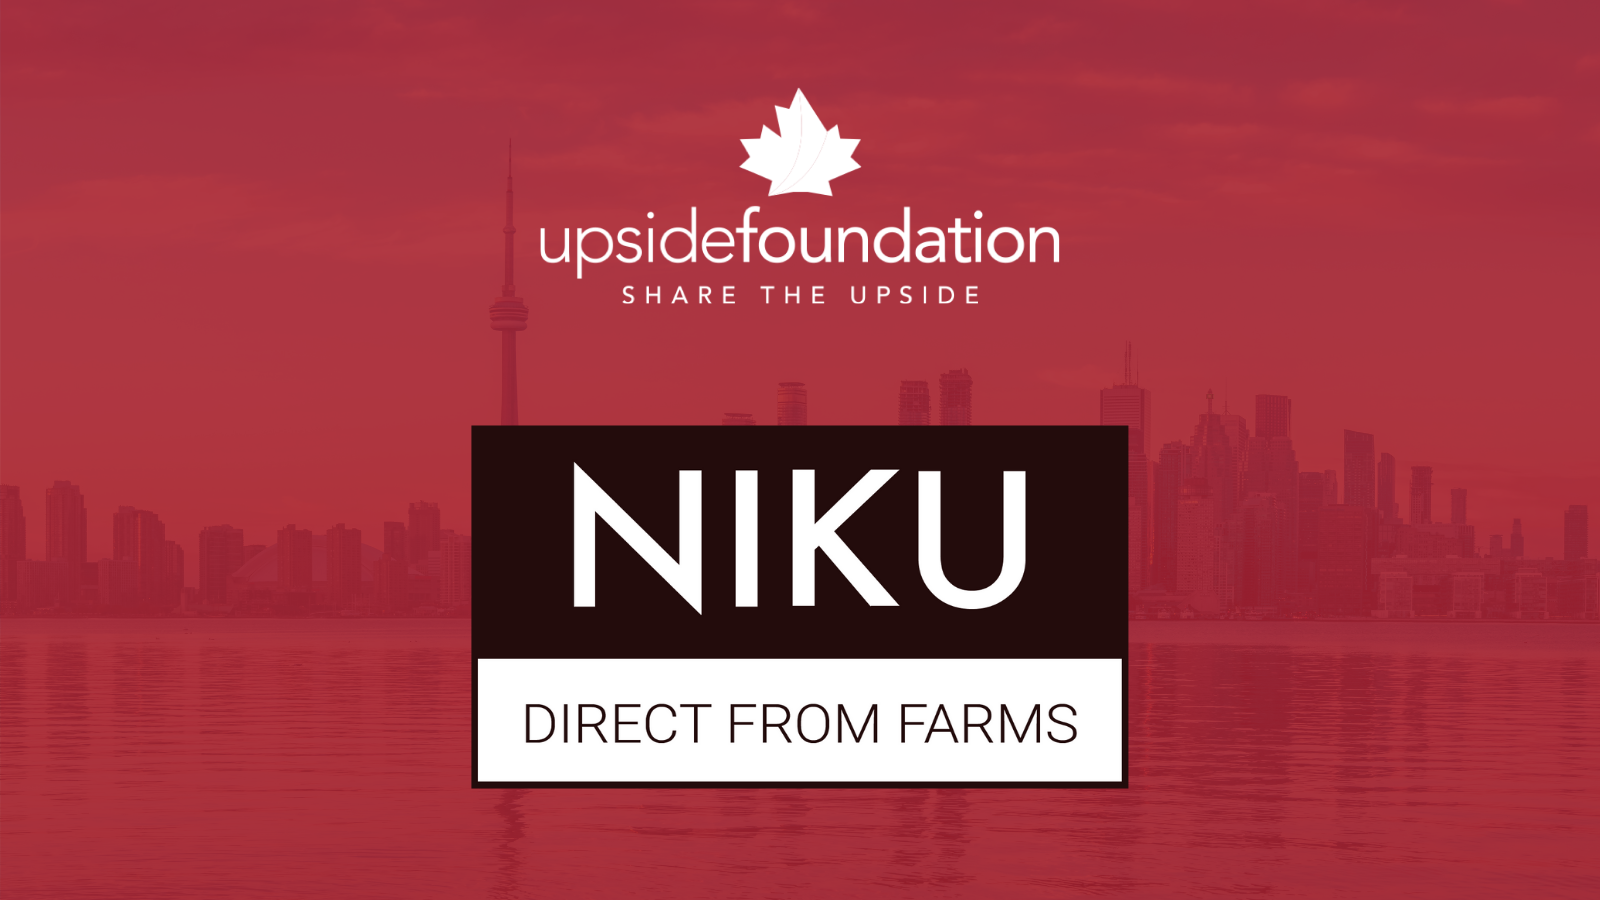 The NIKU Farms logo and Upside Foundation logo on a faded image of the Toronto skyline.